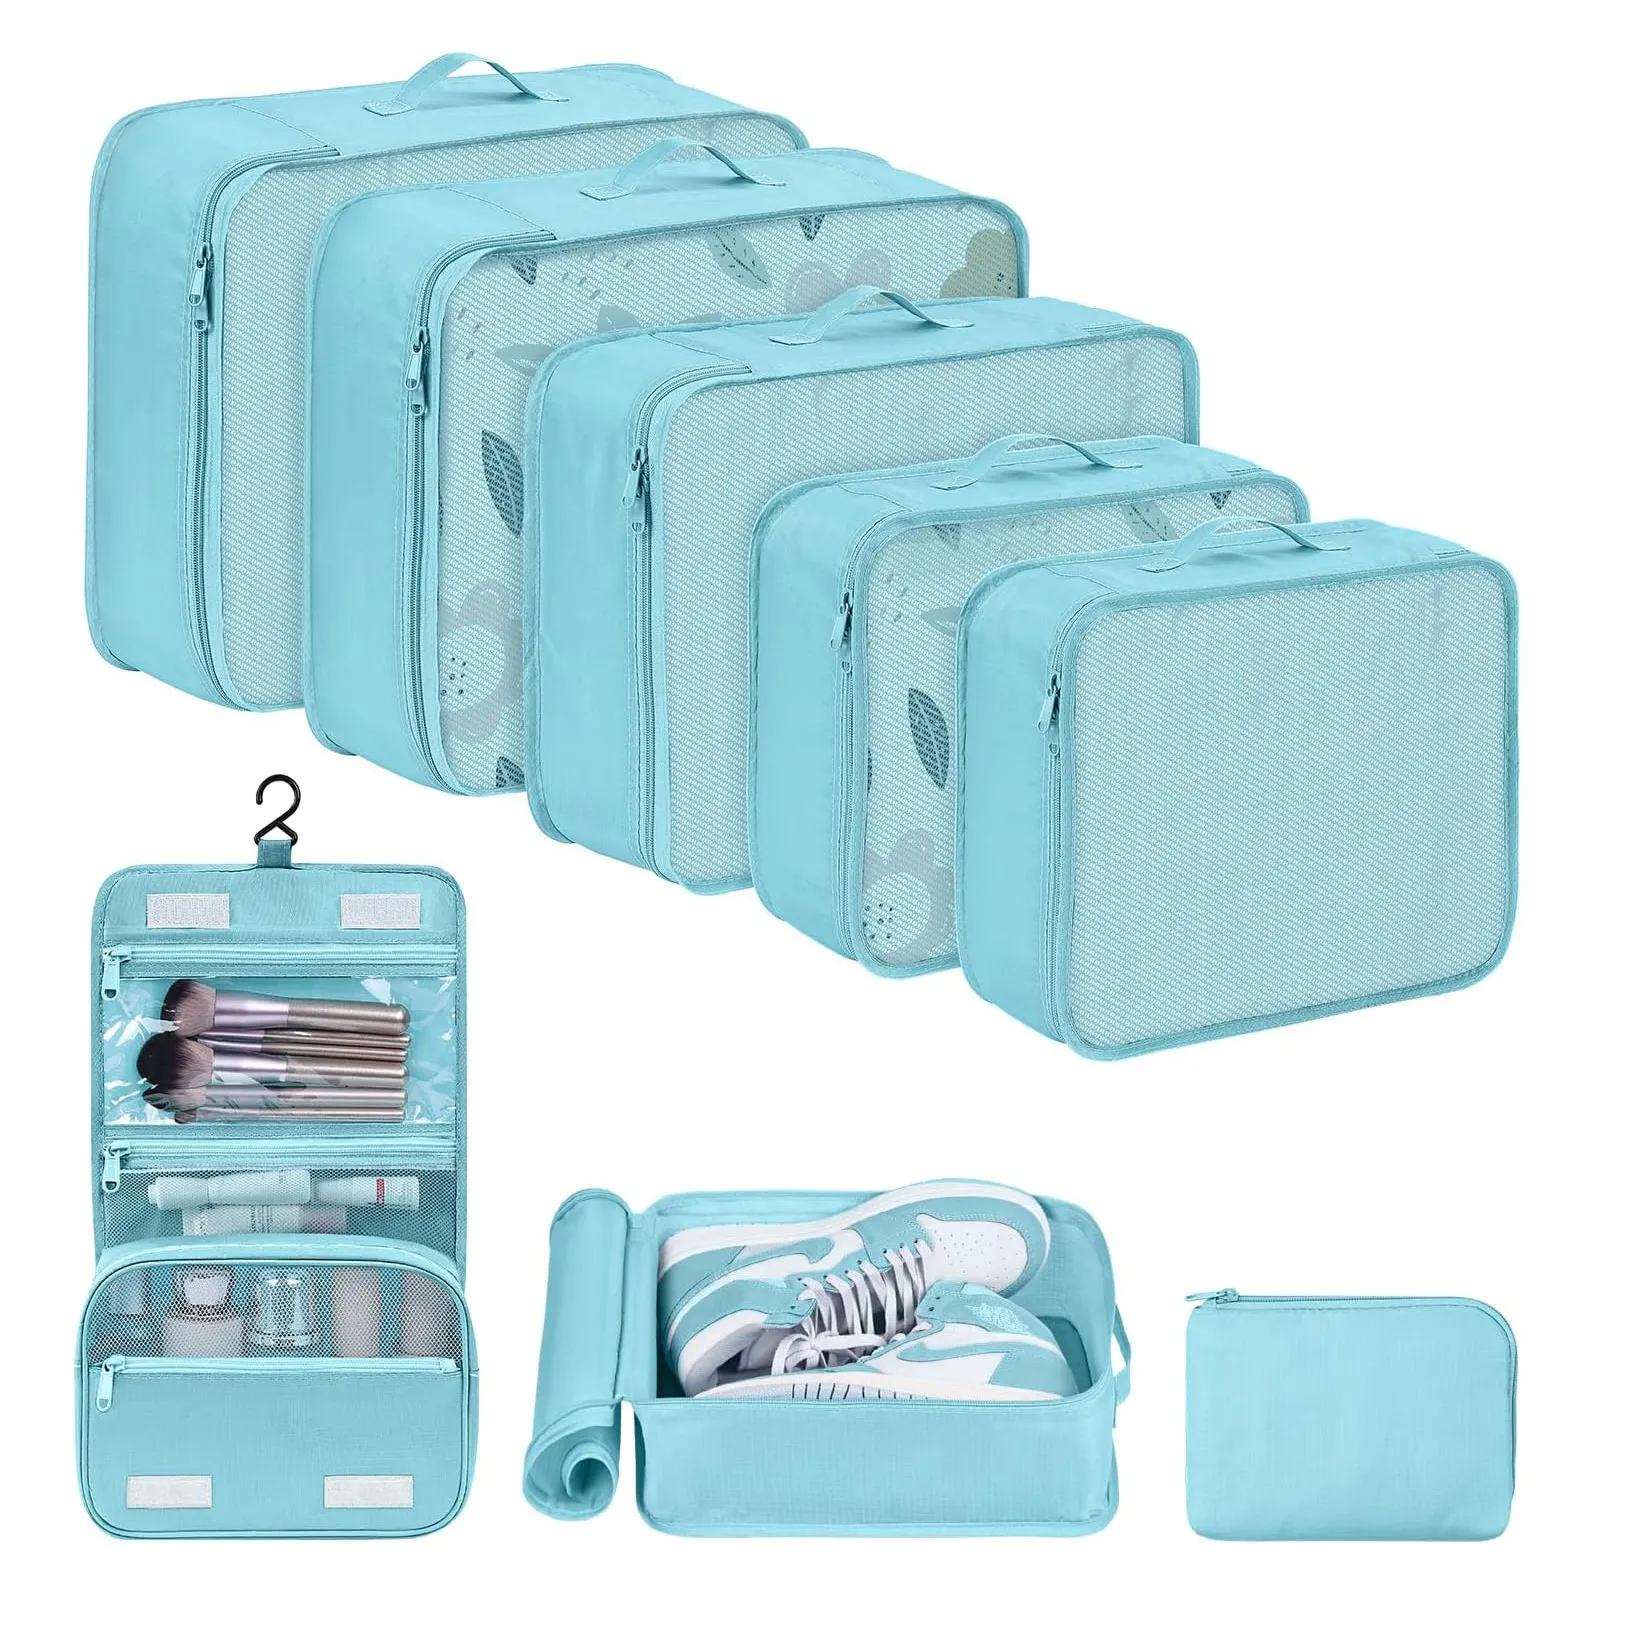 Carry on Leve Viagem Cubes Bagagem Bag Viagem com Grandes Higiene Pessoal Bag Embalagem Cubes Suitcase Organizer Bags Set